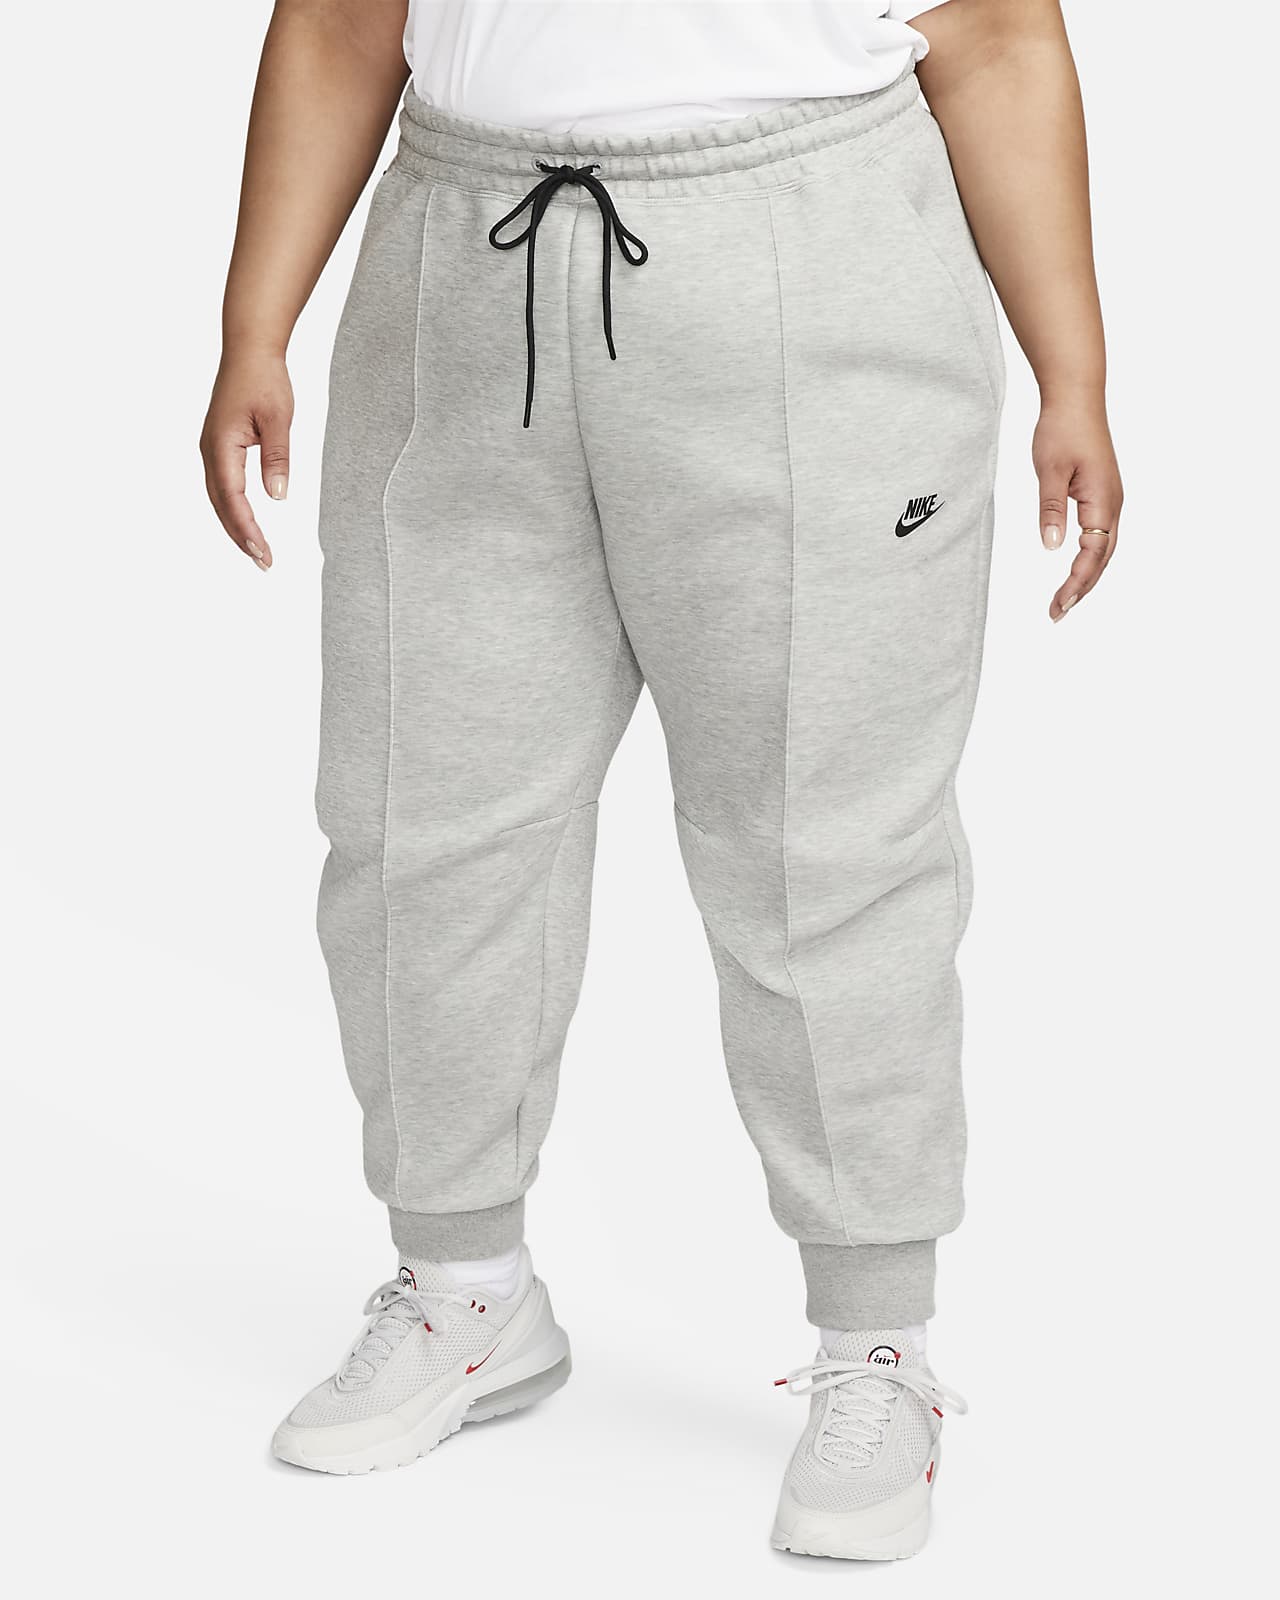 Pantalon de jogging taille mi-haute Nike Sportswear Tech Fleece pour femme (grande taille)